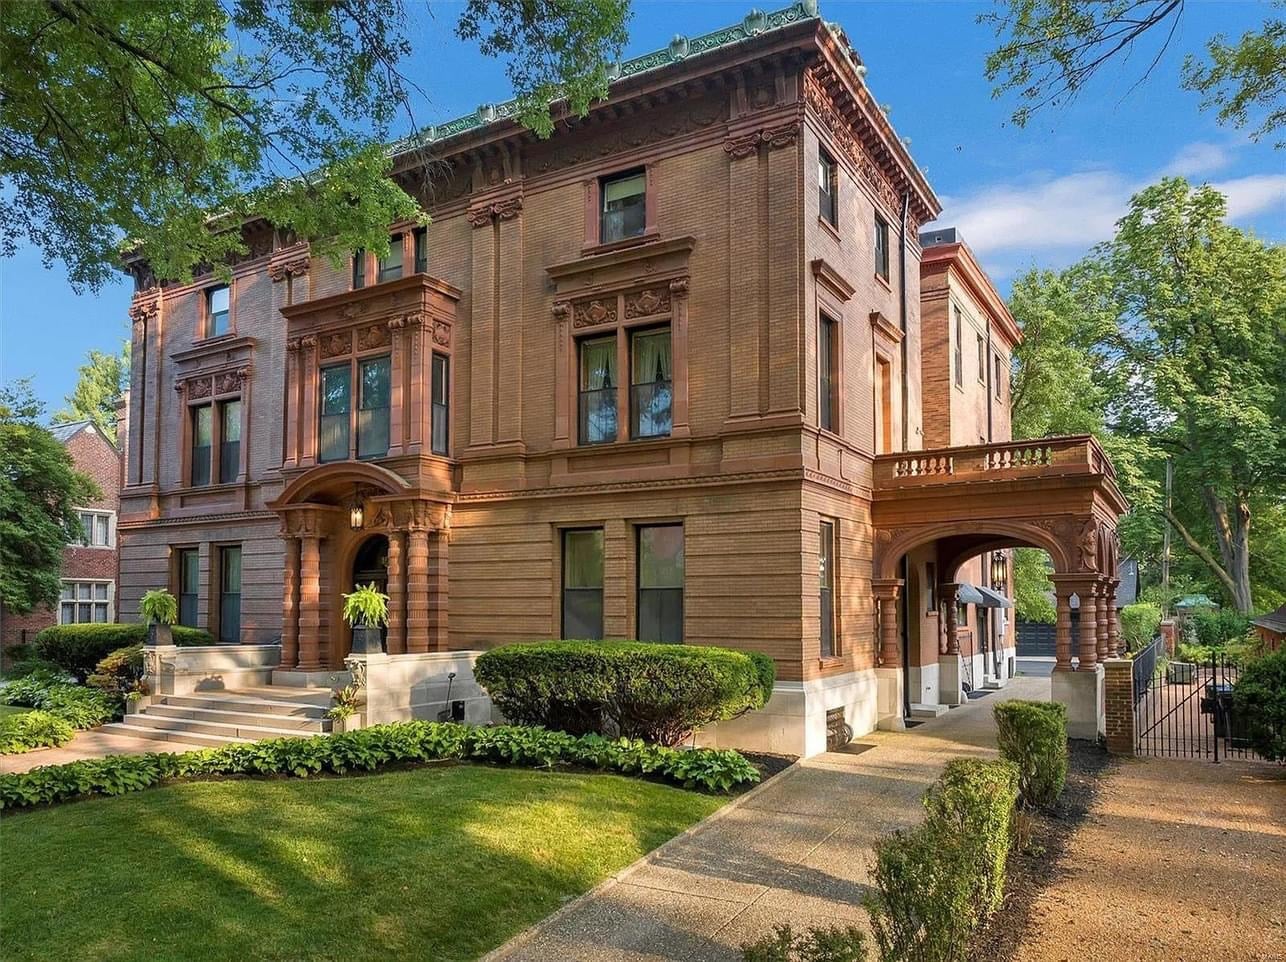 1896 Mansion For Sale In Saint Louis Missouri